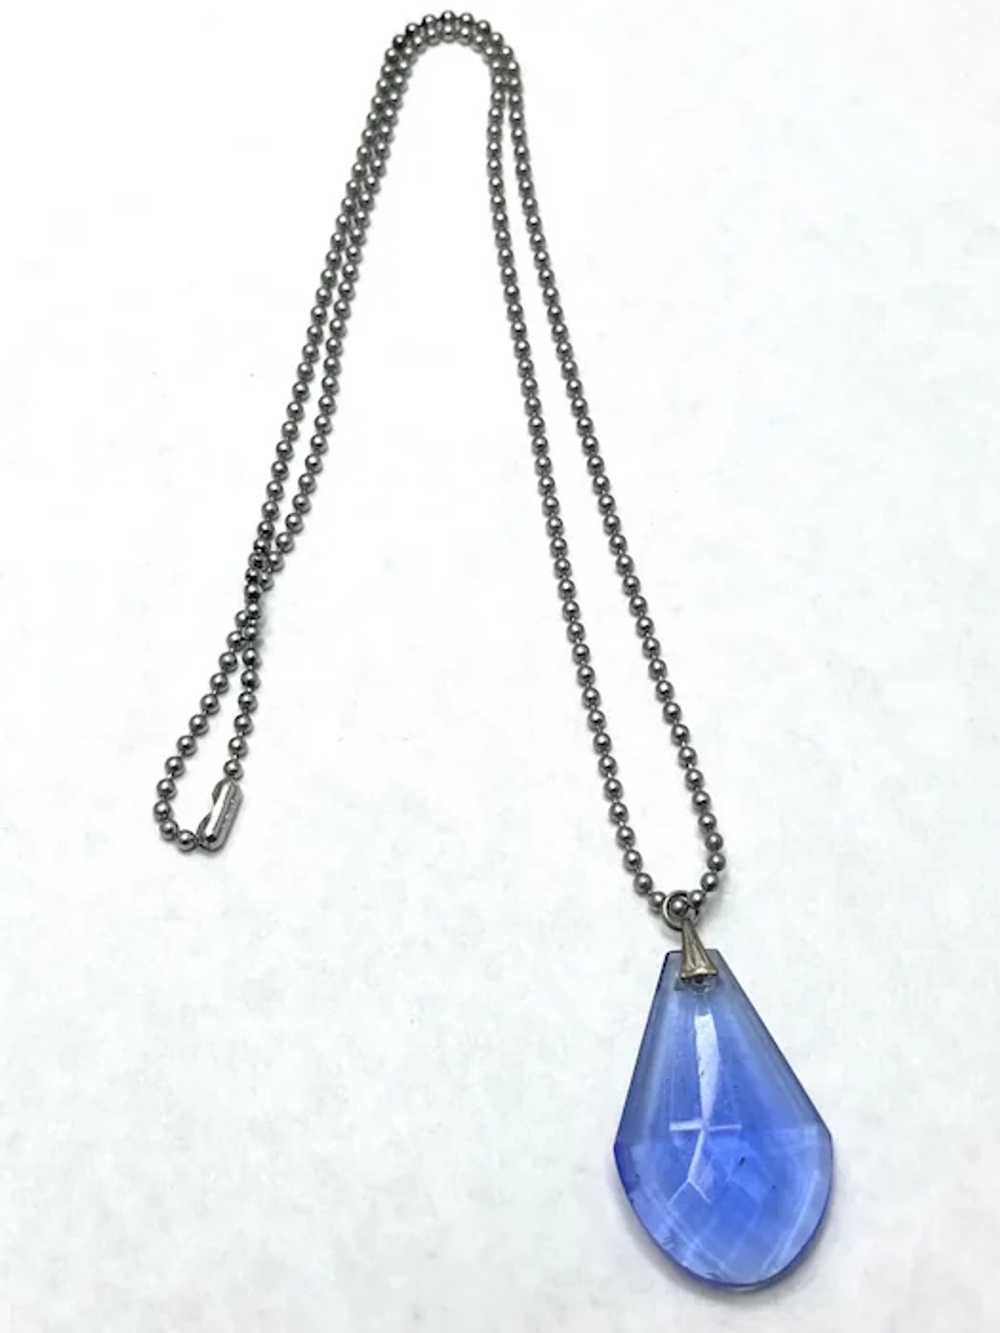 Vintage Blue Glass Faceted Pendant Necklace - image 4